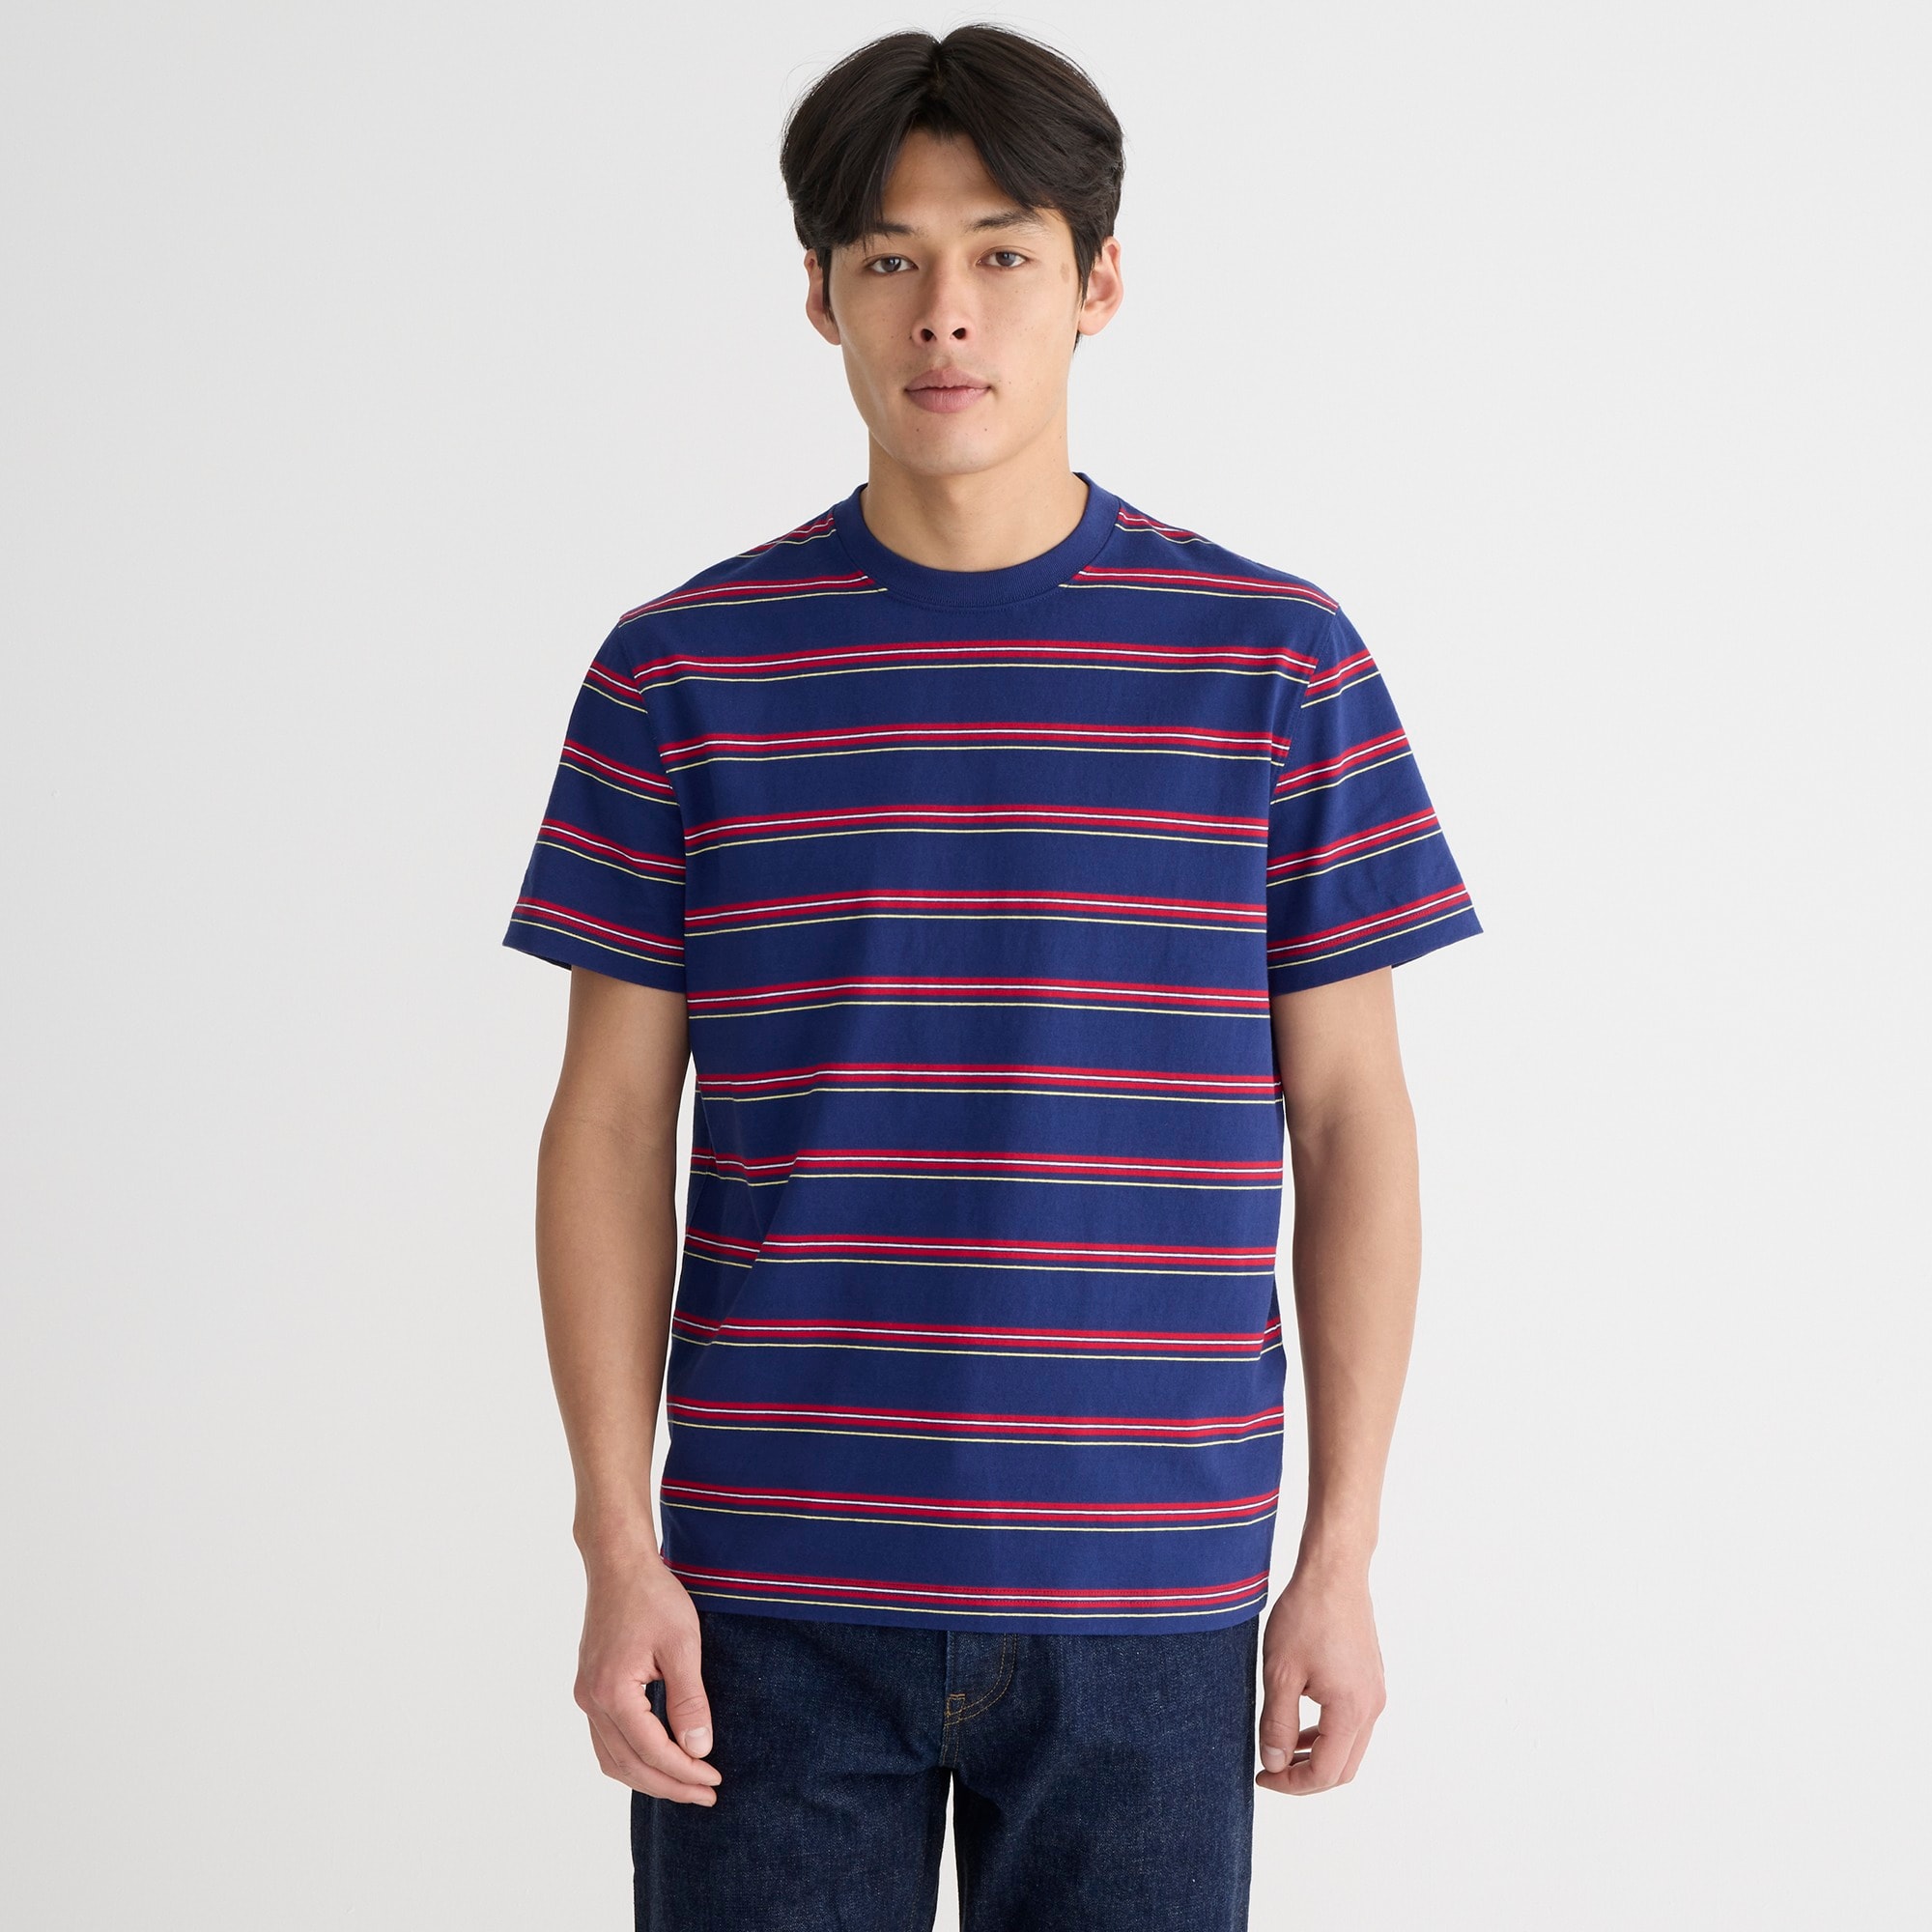 Jcrew Relaxed premium-weight cotton T-shirt in stripe